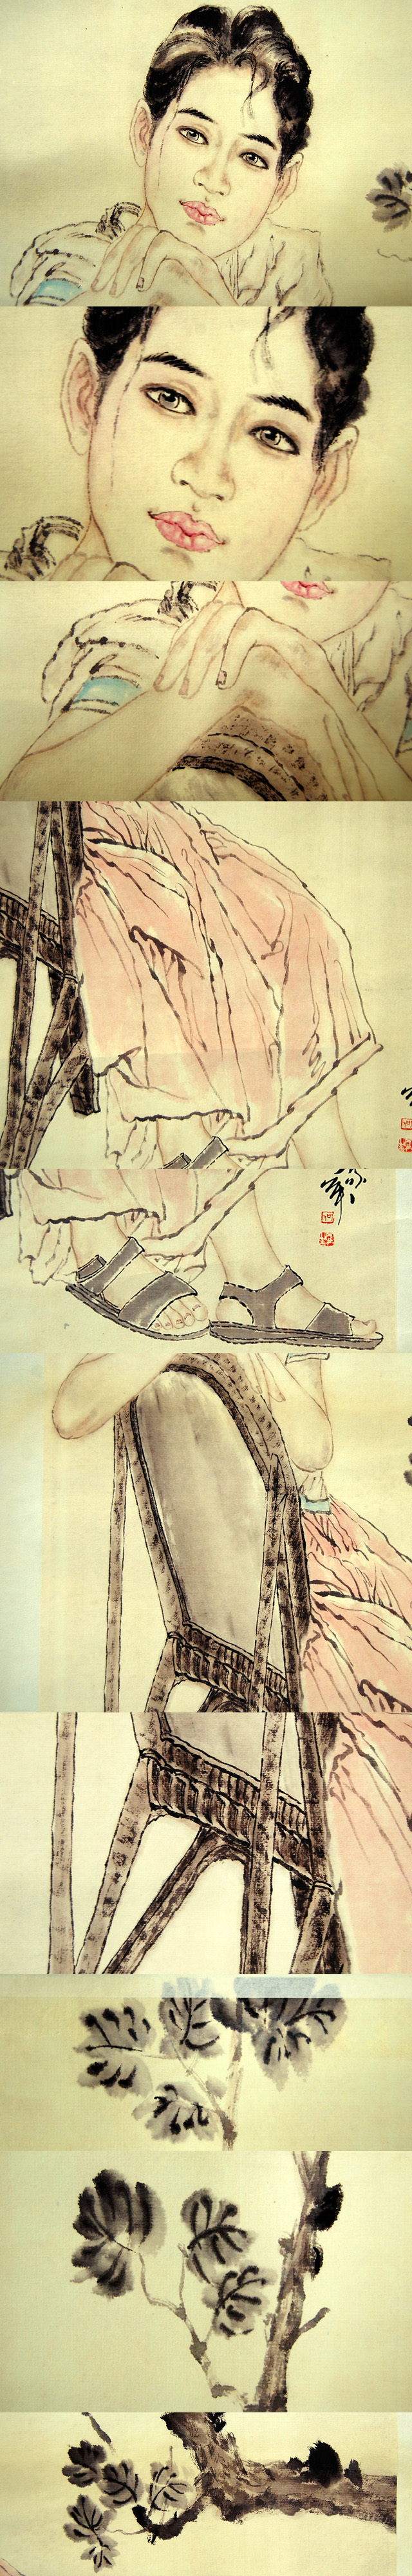 大人気通販F20634 中国美術 何家英「美人画 椅子に掛ける女性」人物画 掛軸 紙本 彩色 工芸 中国名家 中国現代アート 掛軸